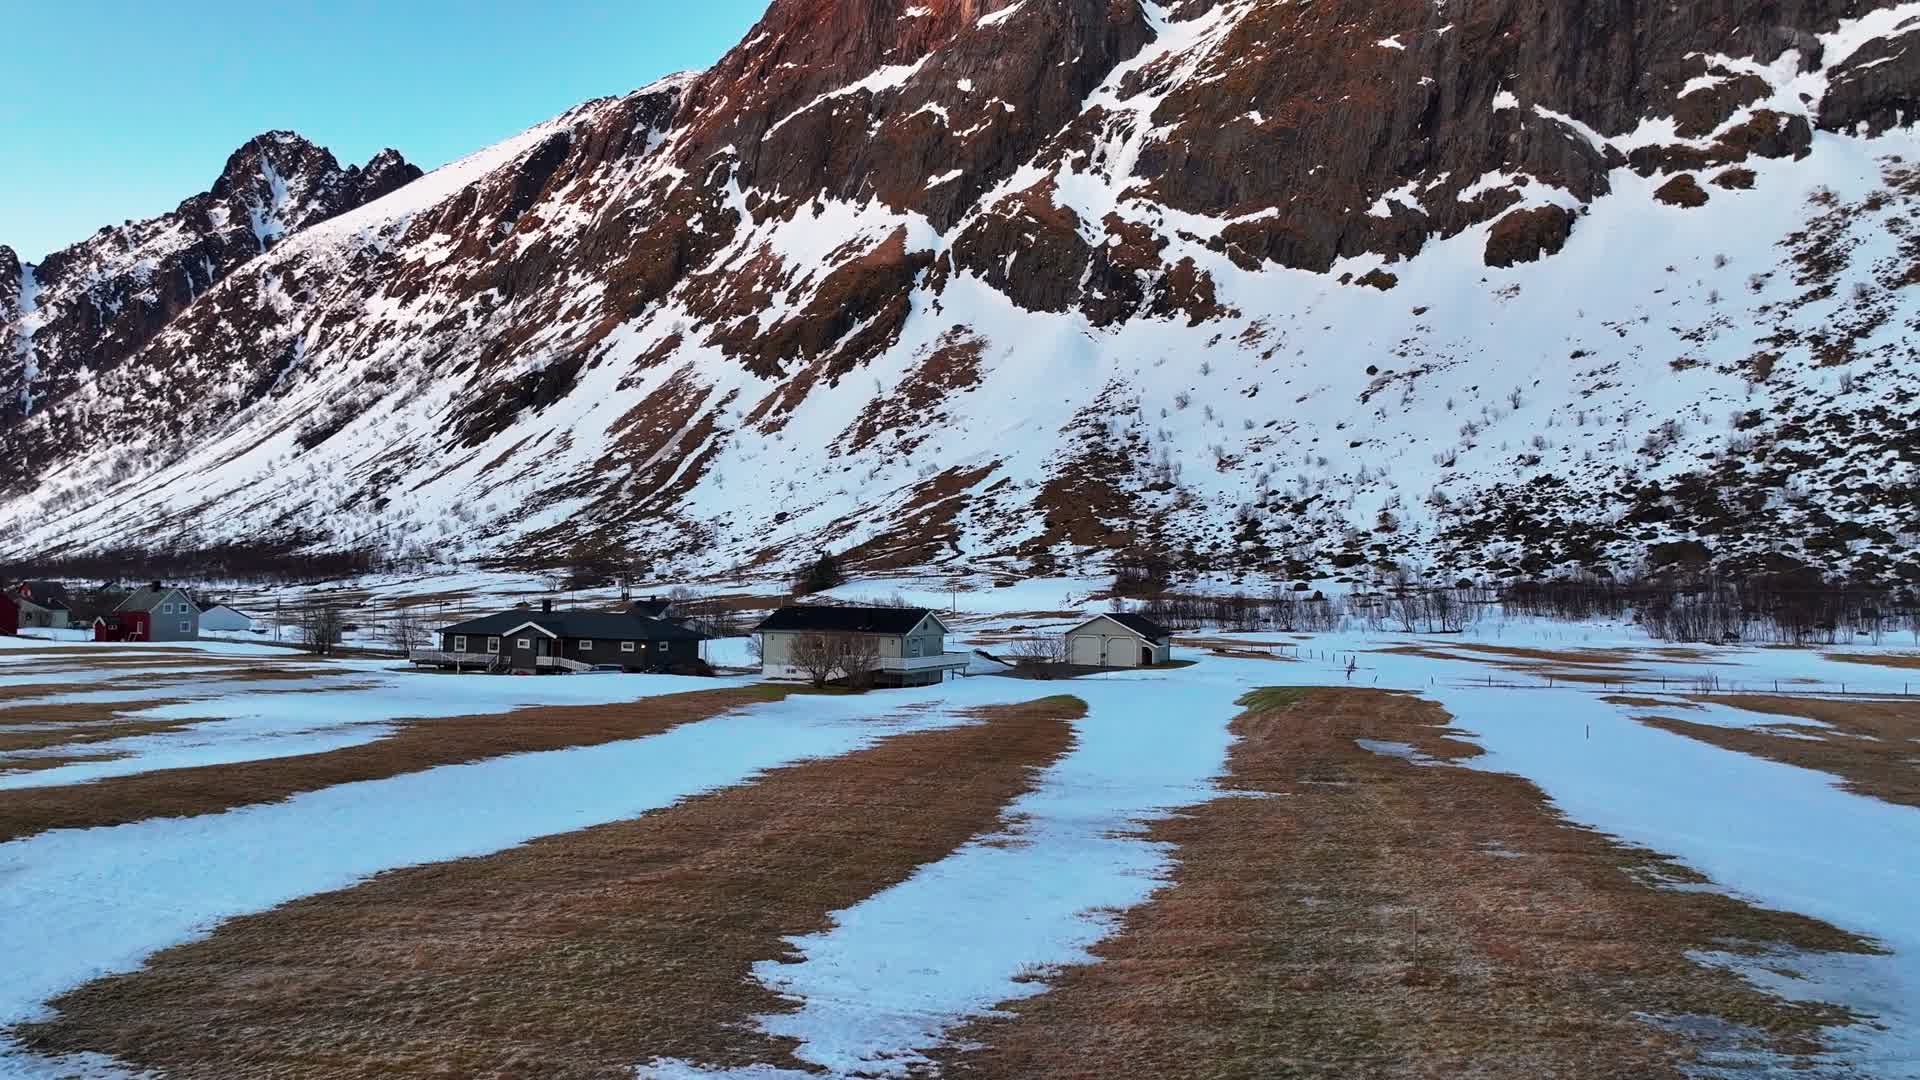 4k航拍北欧挪威塞尼亚岛雪景风光视频的预览图